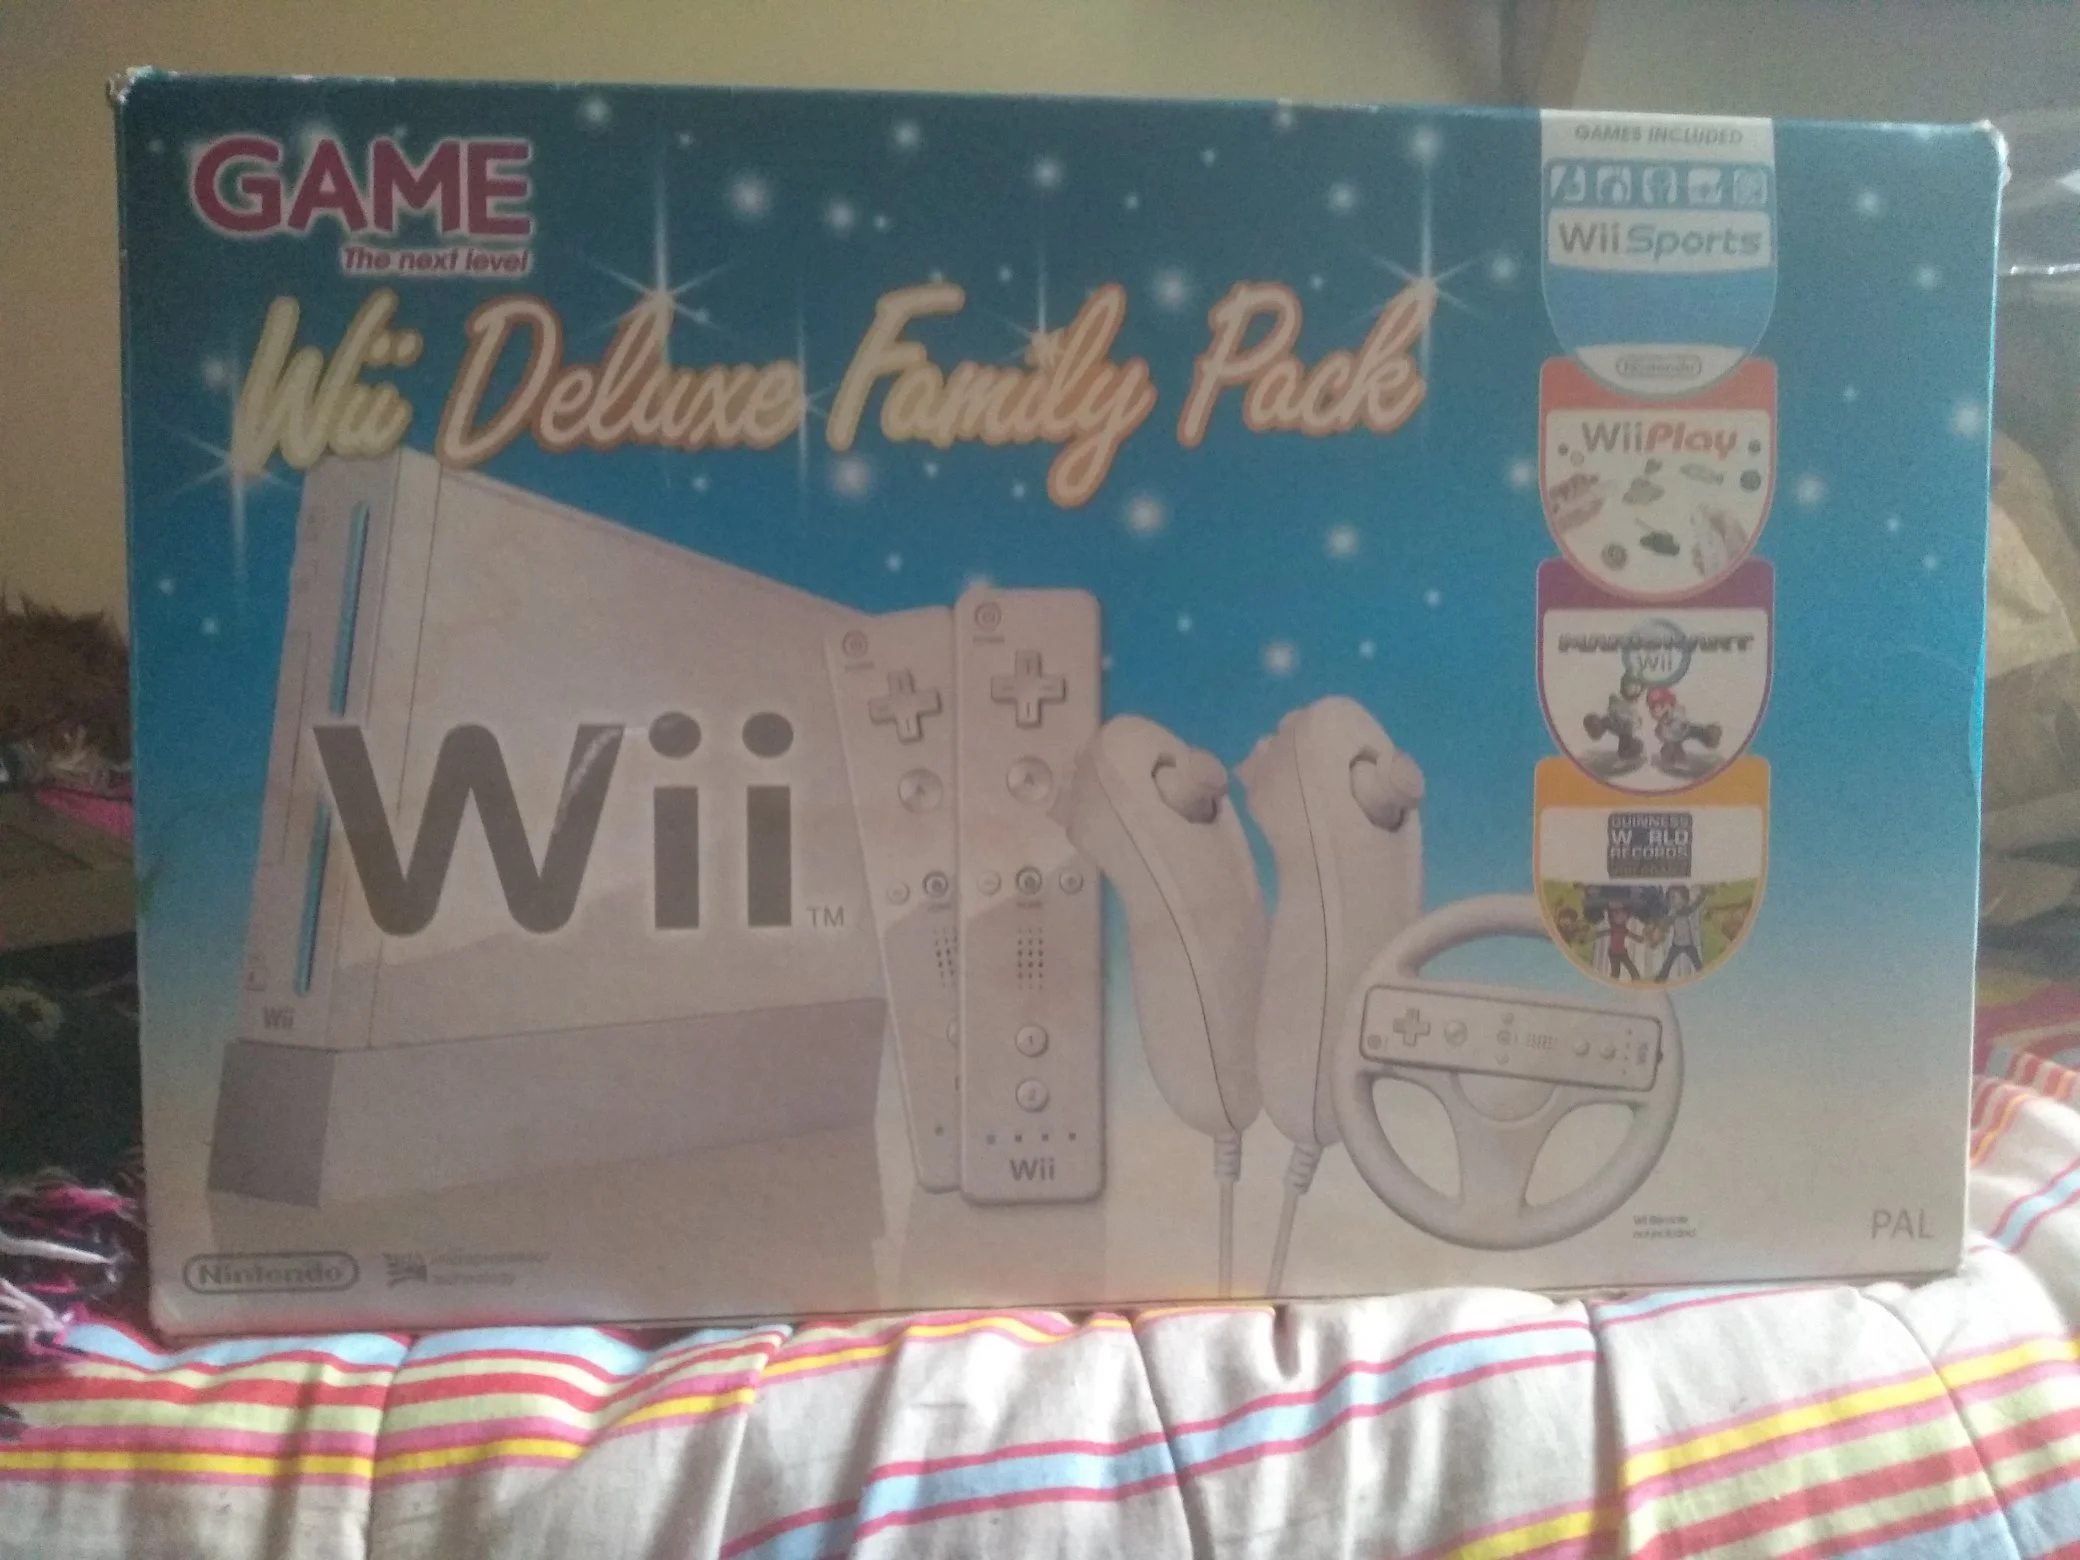  Nintendo Wii Deluxe Family Pack